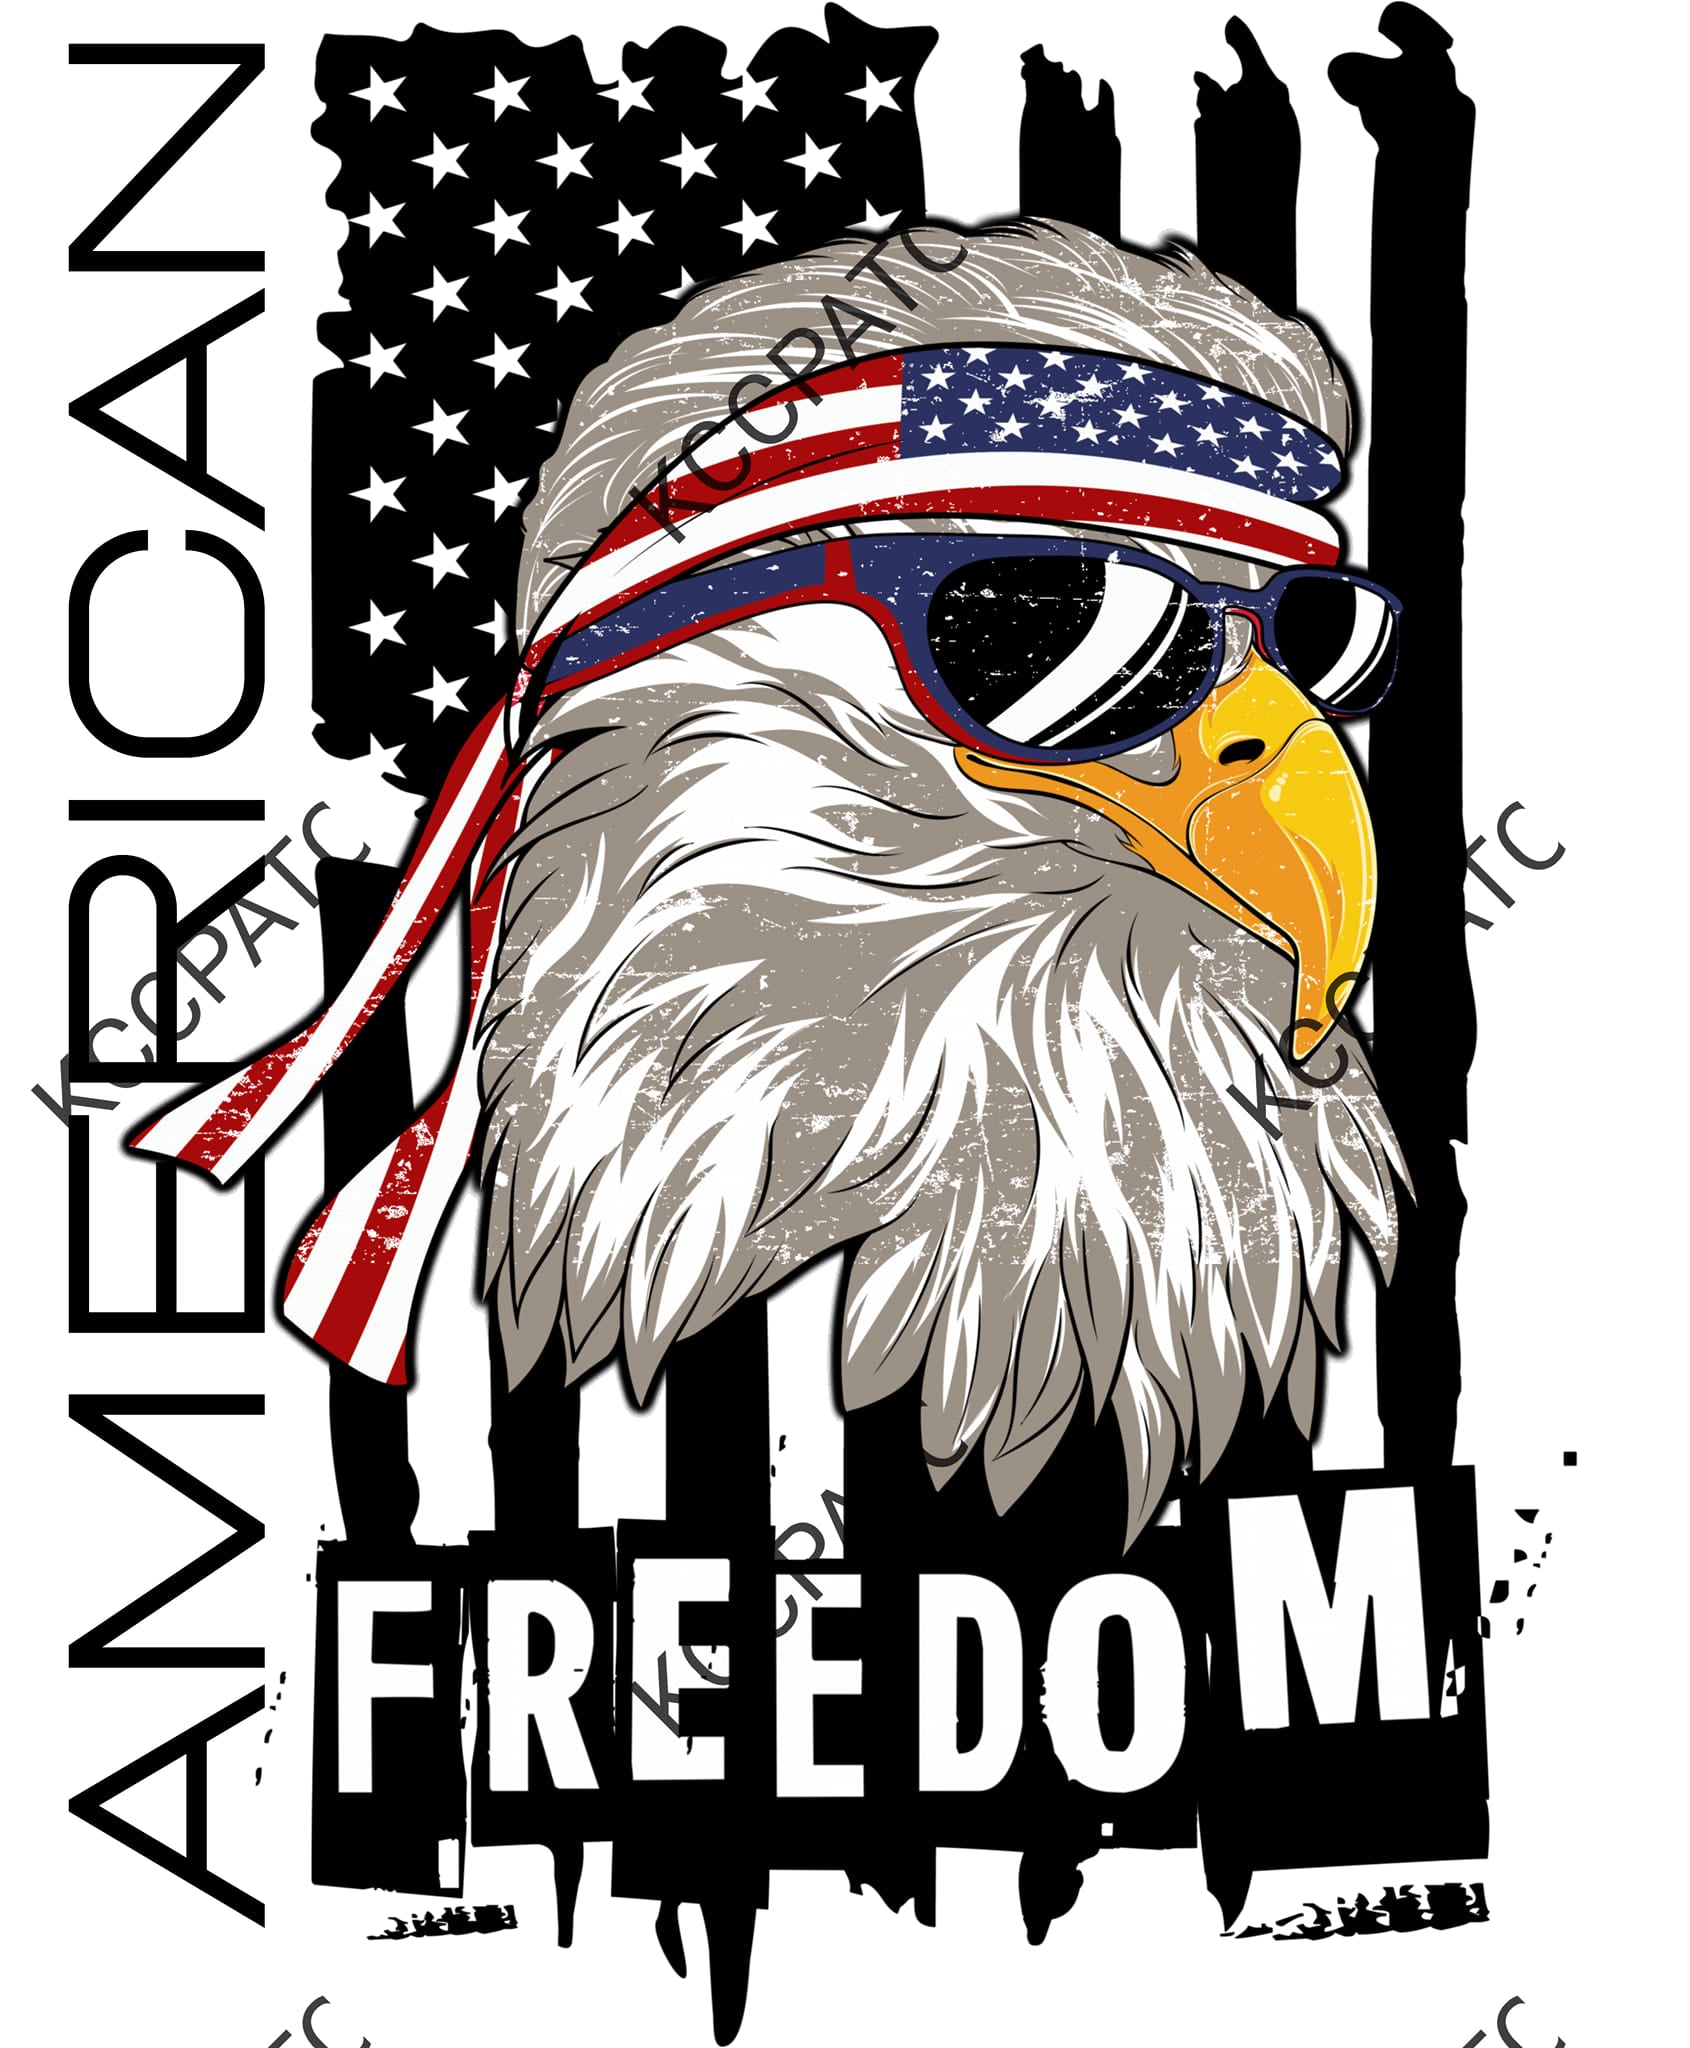 American Freedom